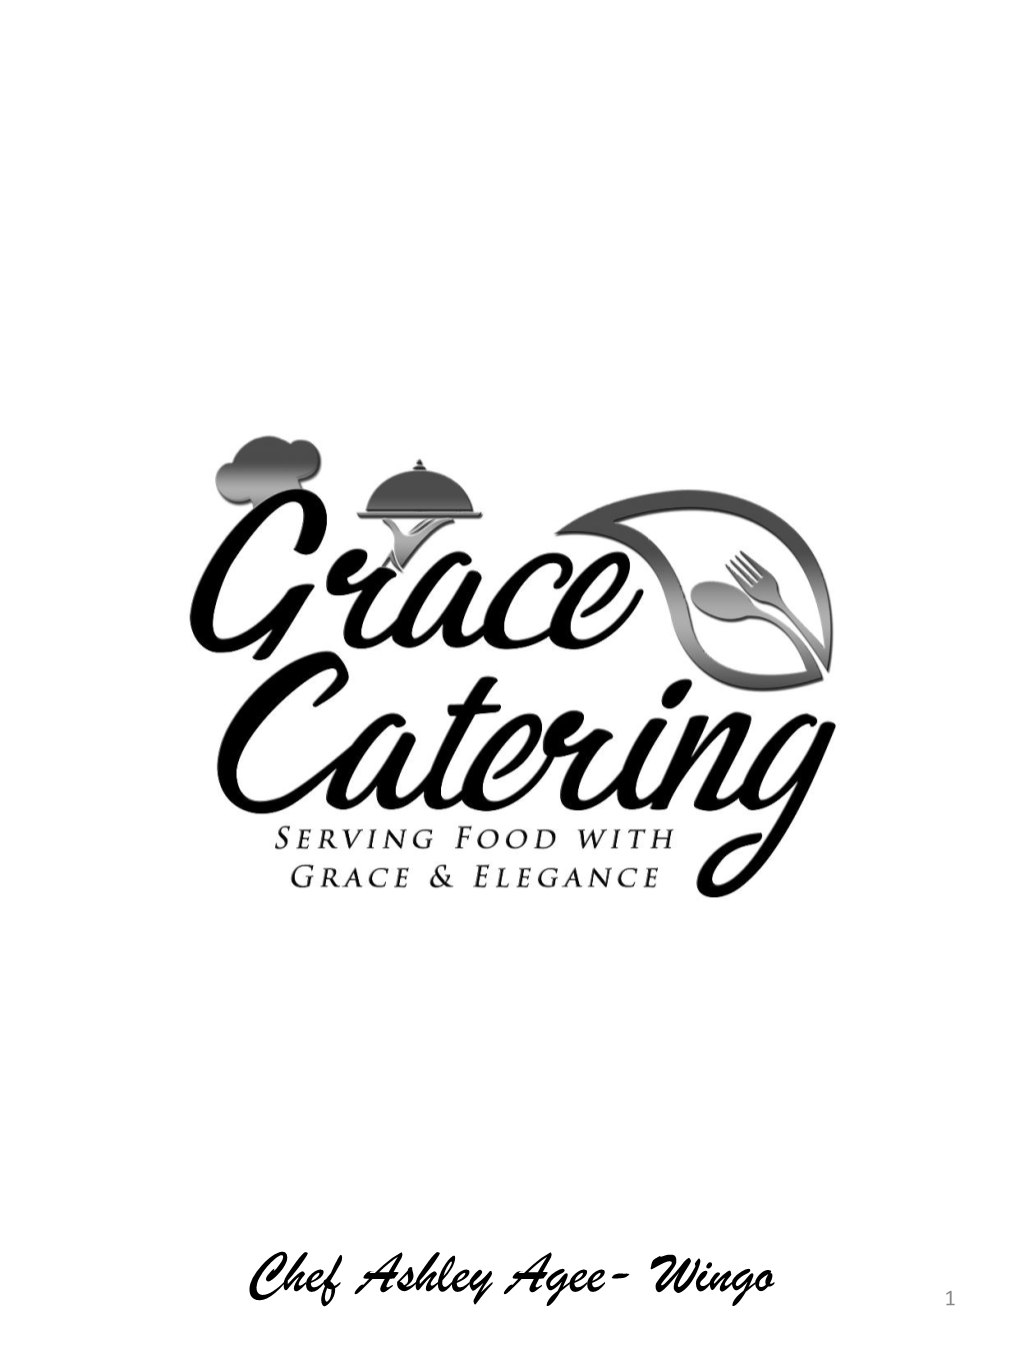 Grace Catering, LLC